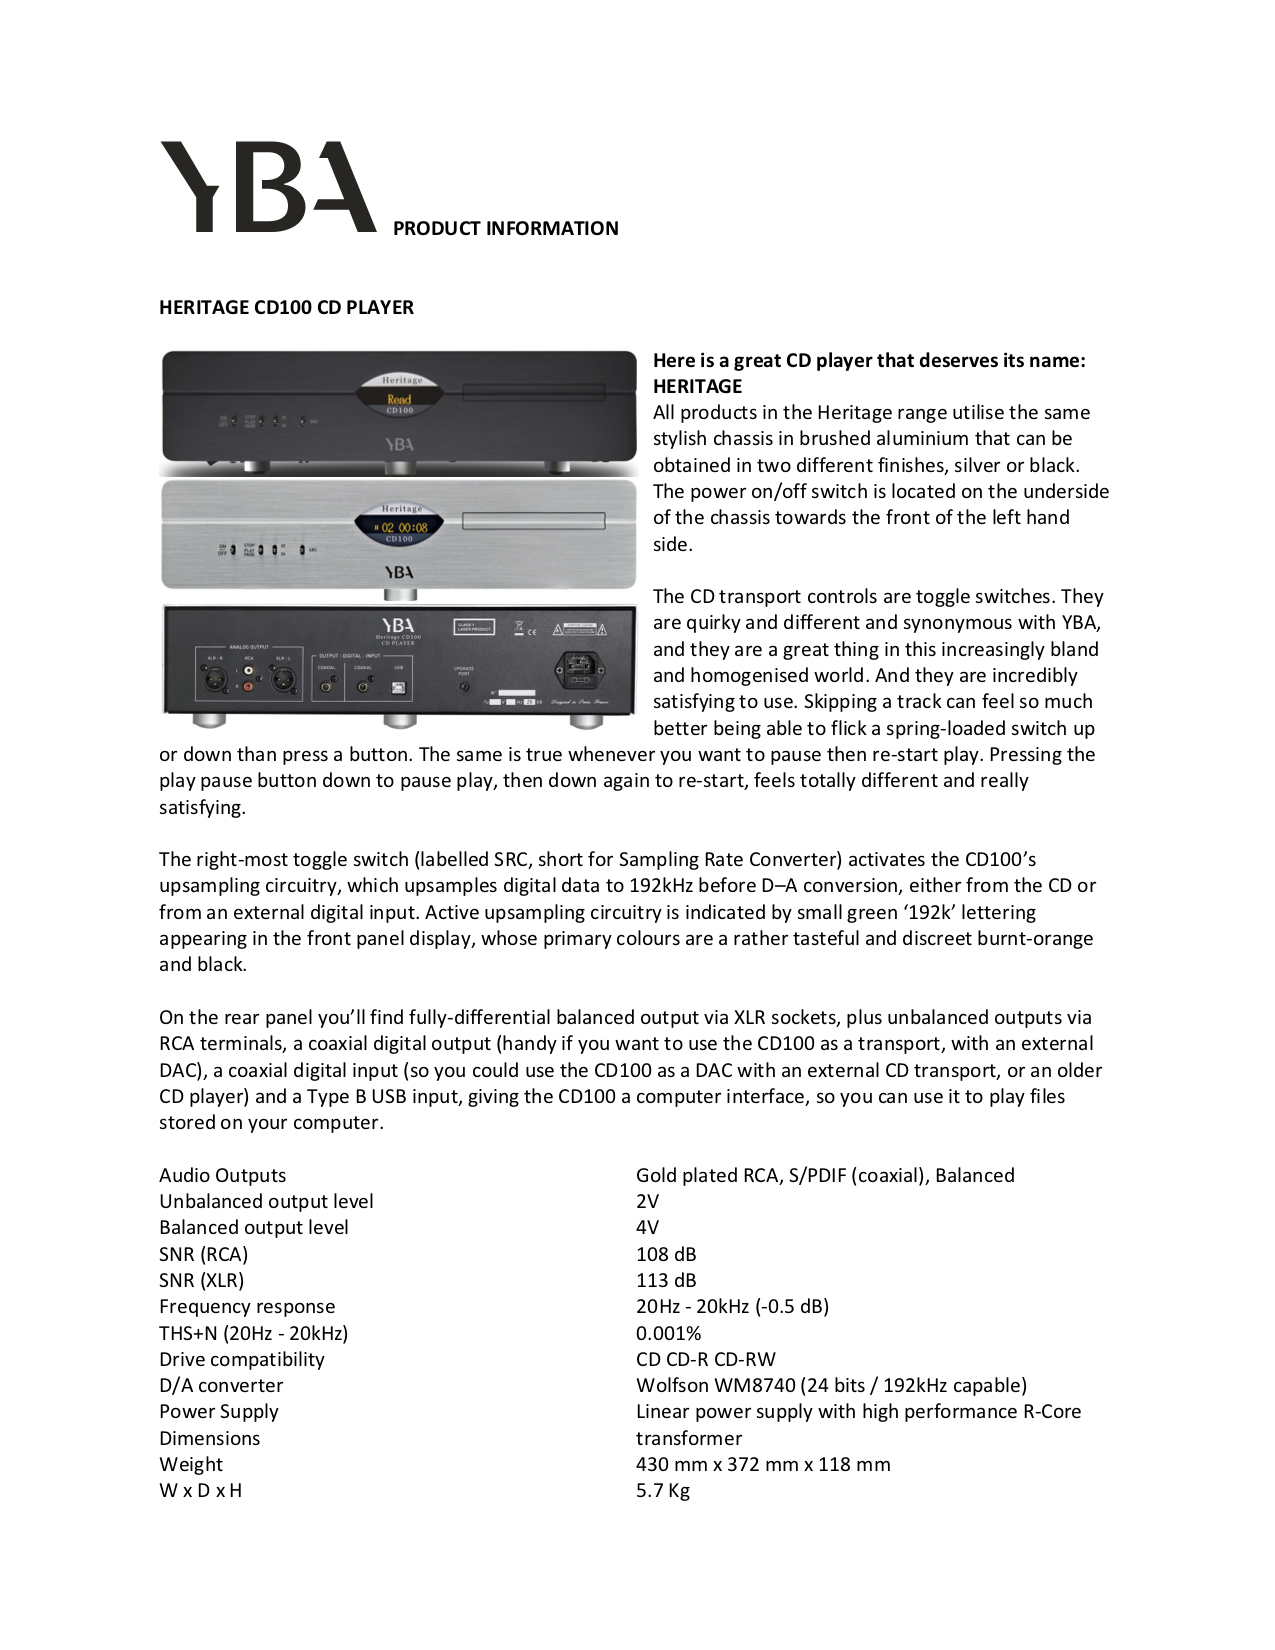 YBA Heritage CD100 Info Sheet - Norman Audio